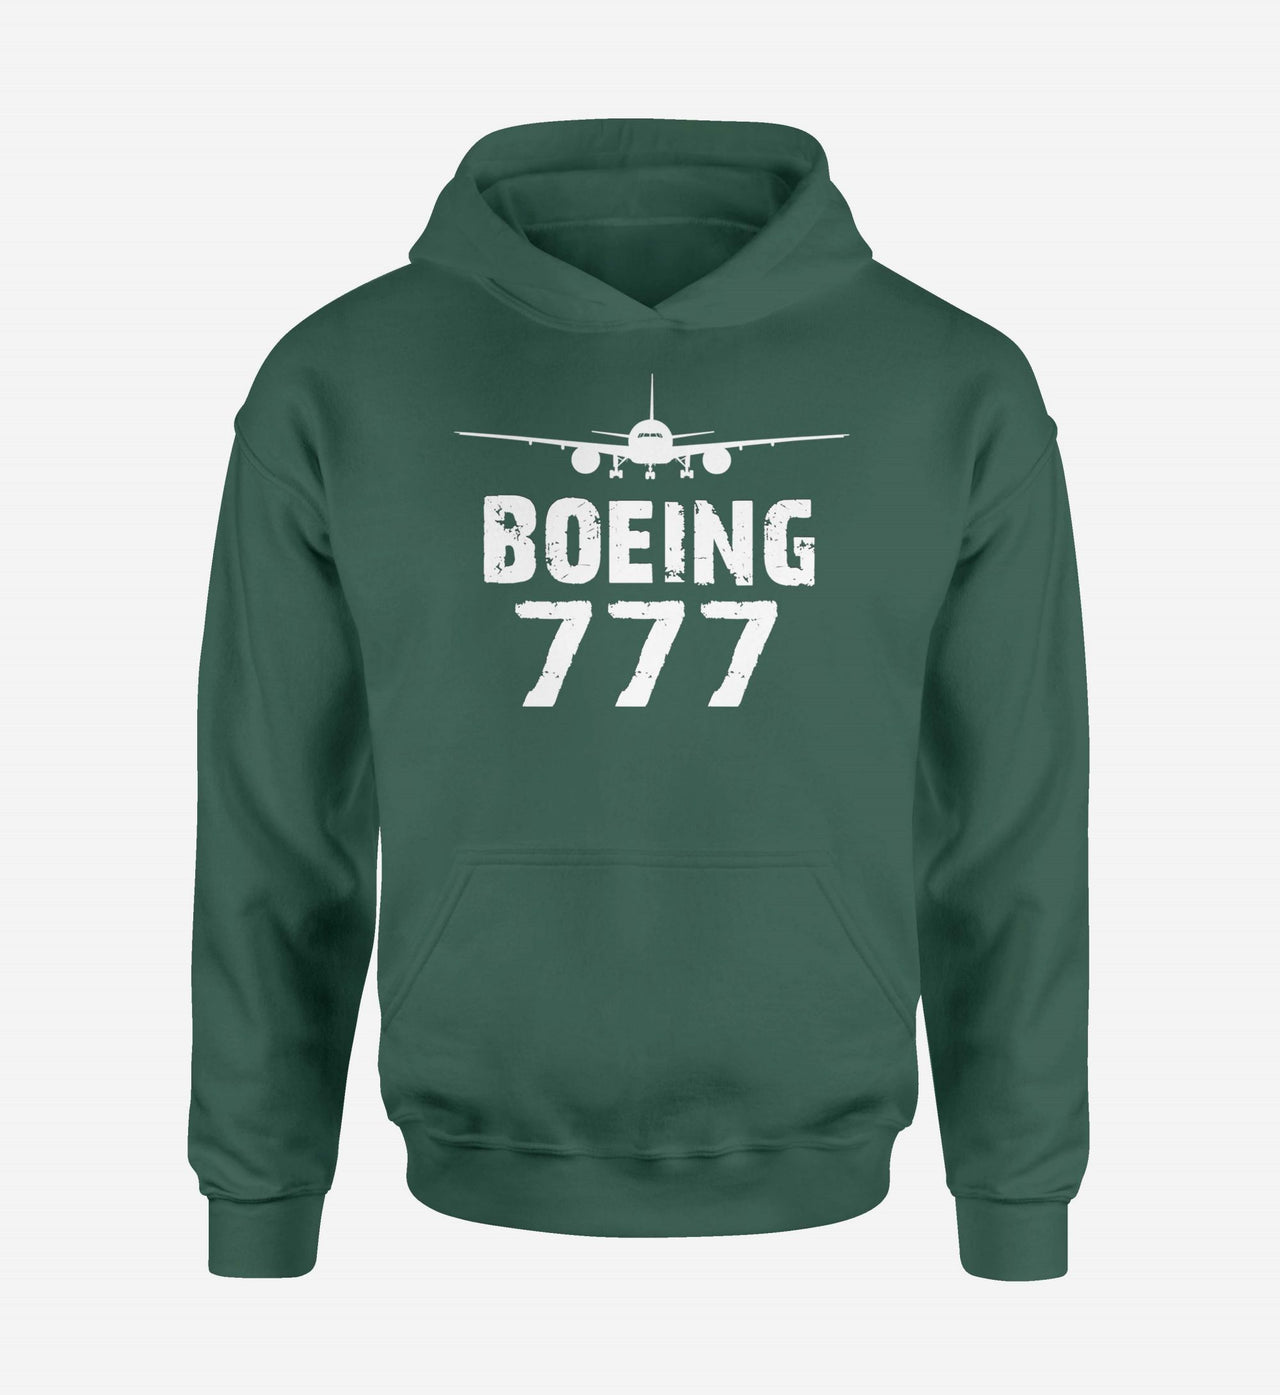 Boeing 777 & Plane Designed Hoodies